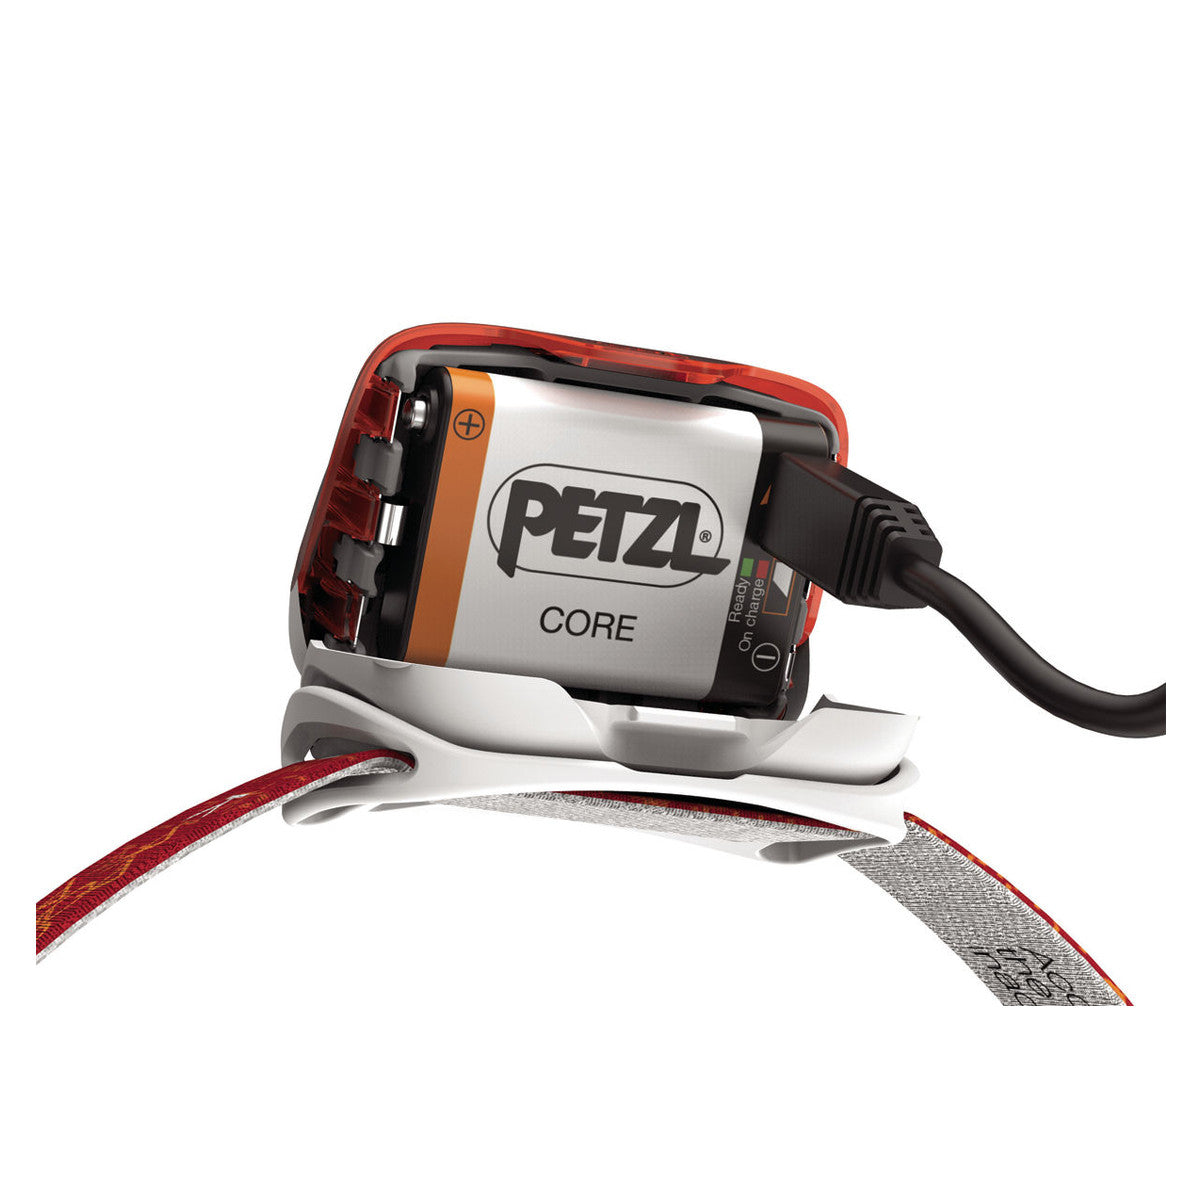 Petzl Core lithium-ion battery 1250 mAh